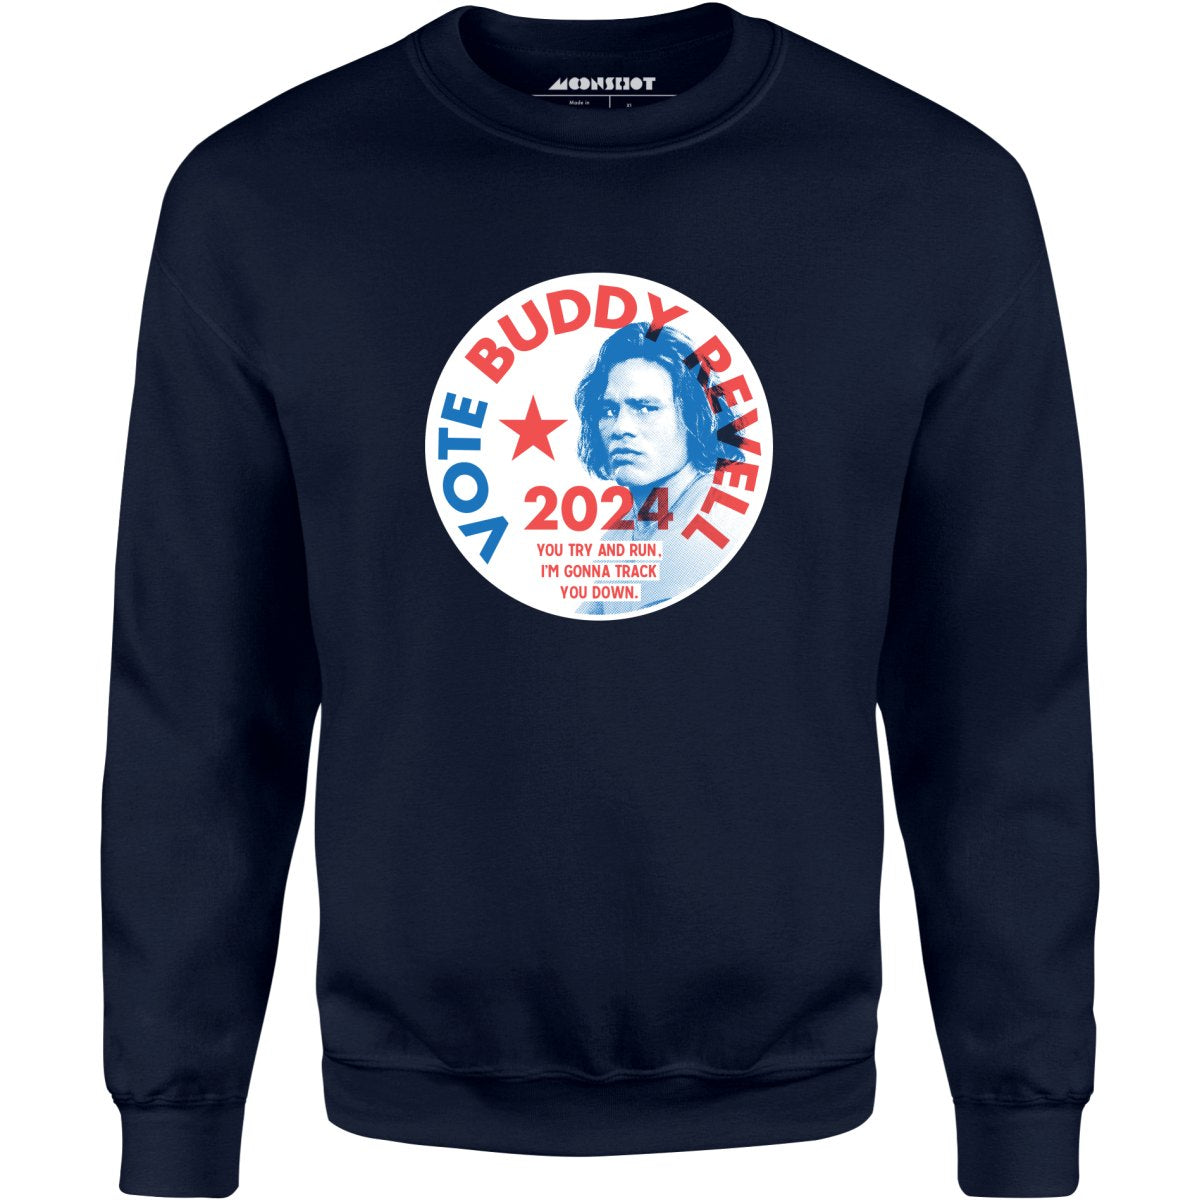 Buddy Revell 2024 - Unisex Sweatshirt